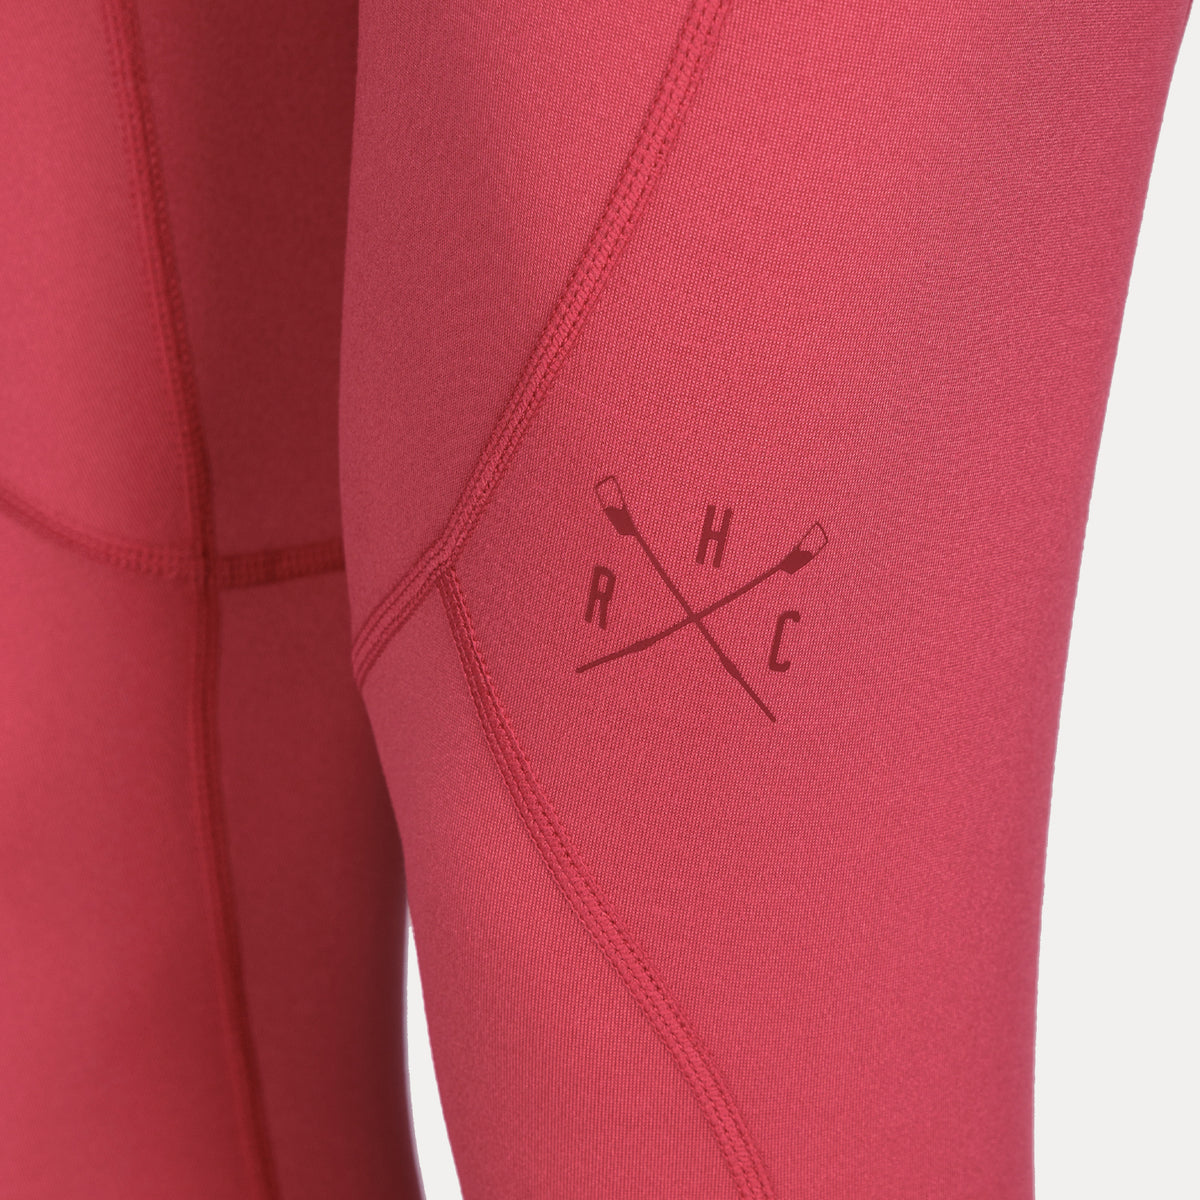 detail photo of rhc crossed oar logo above left knee.